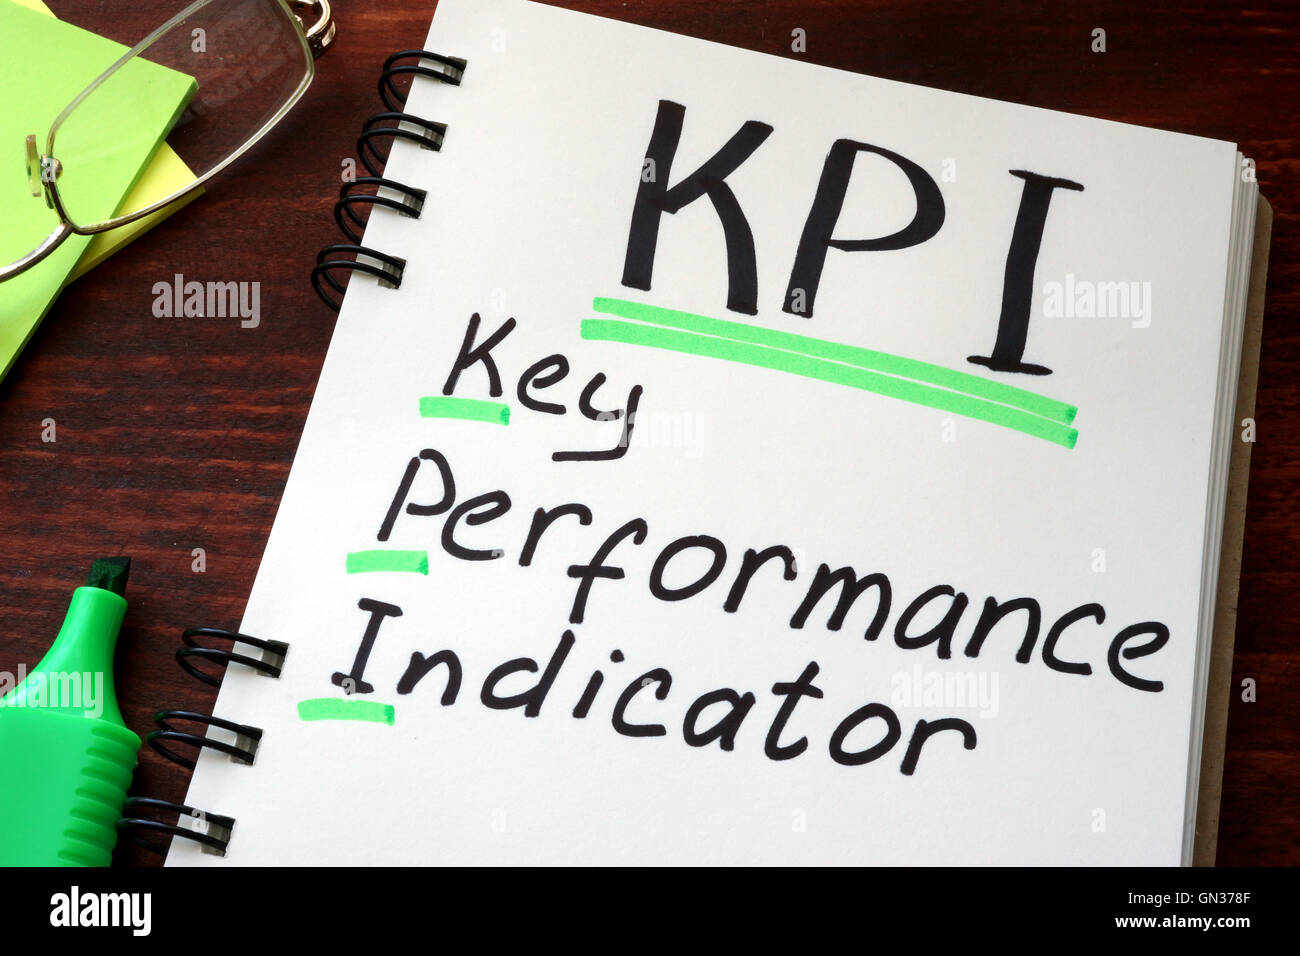 Key Performance Indicators KPI written on a notepad with marker. Stock Photo